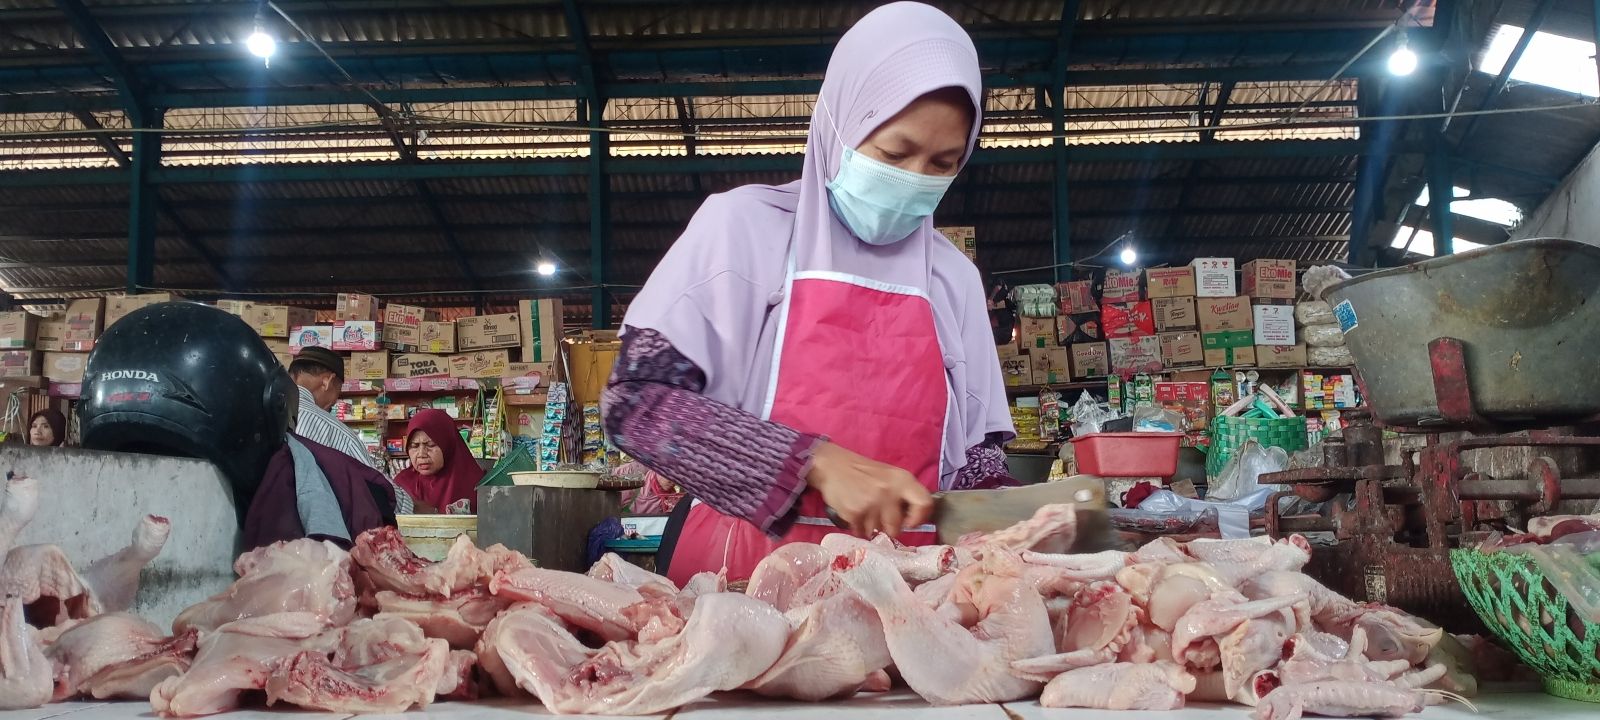 Harga Bahan Pokok di Madiun terbaru, Di Pasar Ini Daging ayam Broiler dan Minyak Goreng Mengalami Kenaikan 